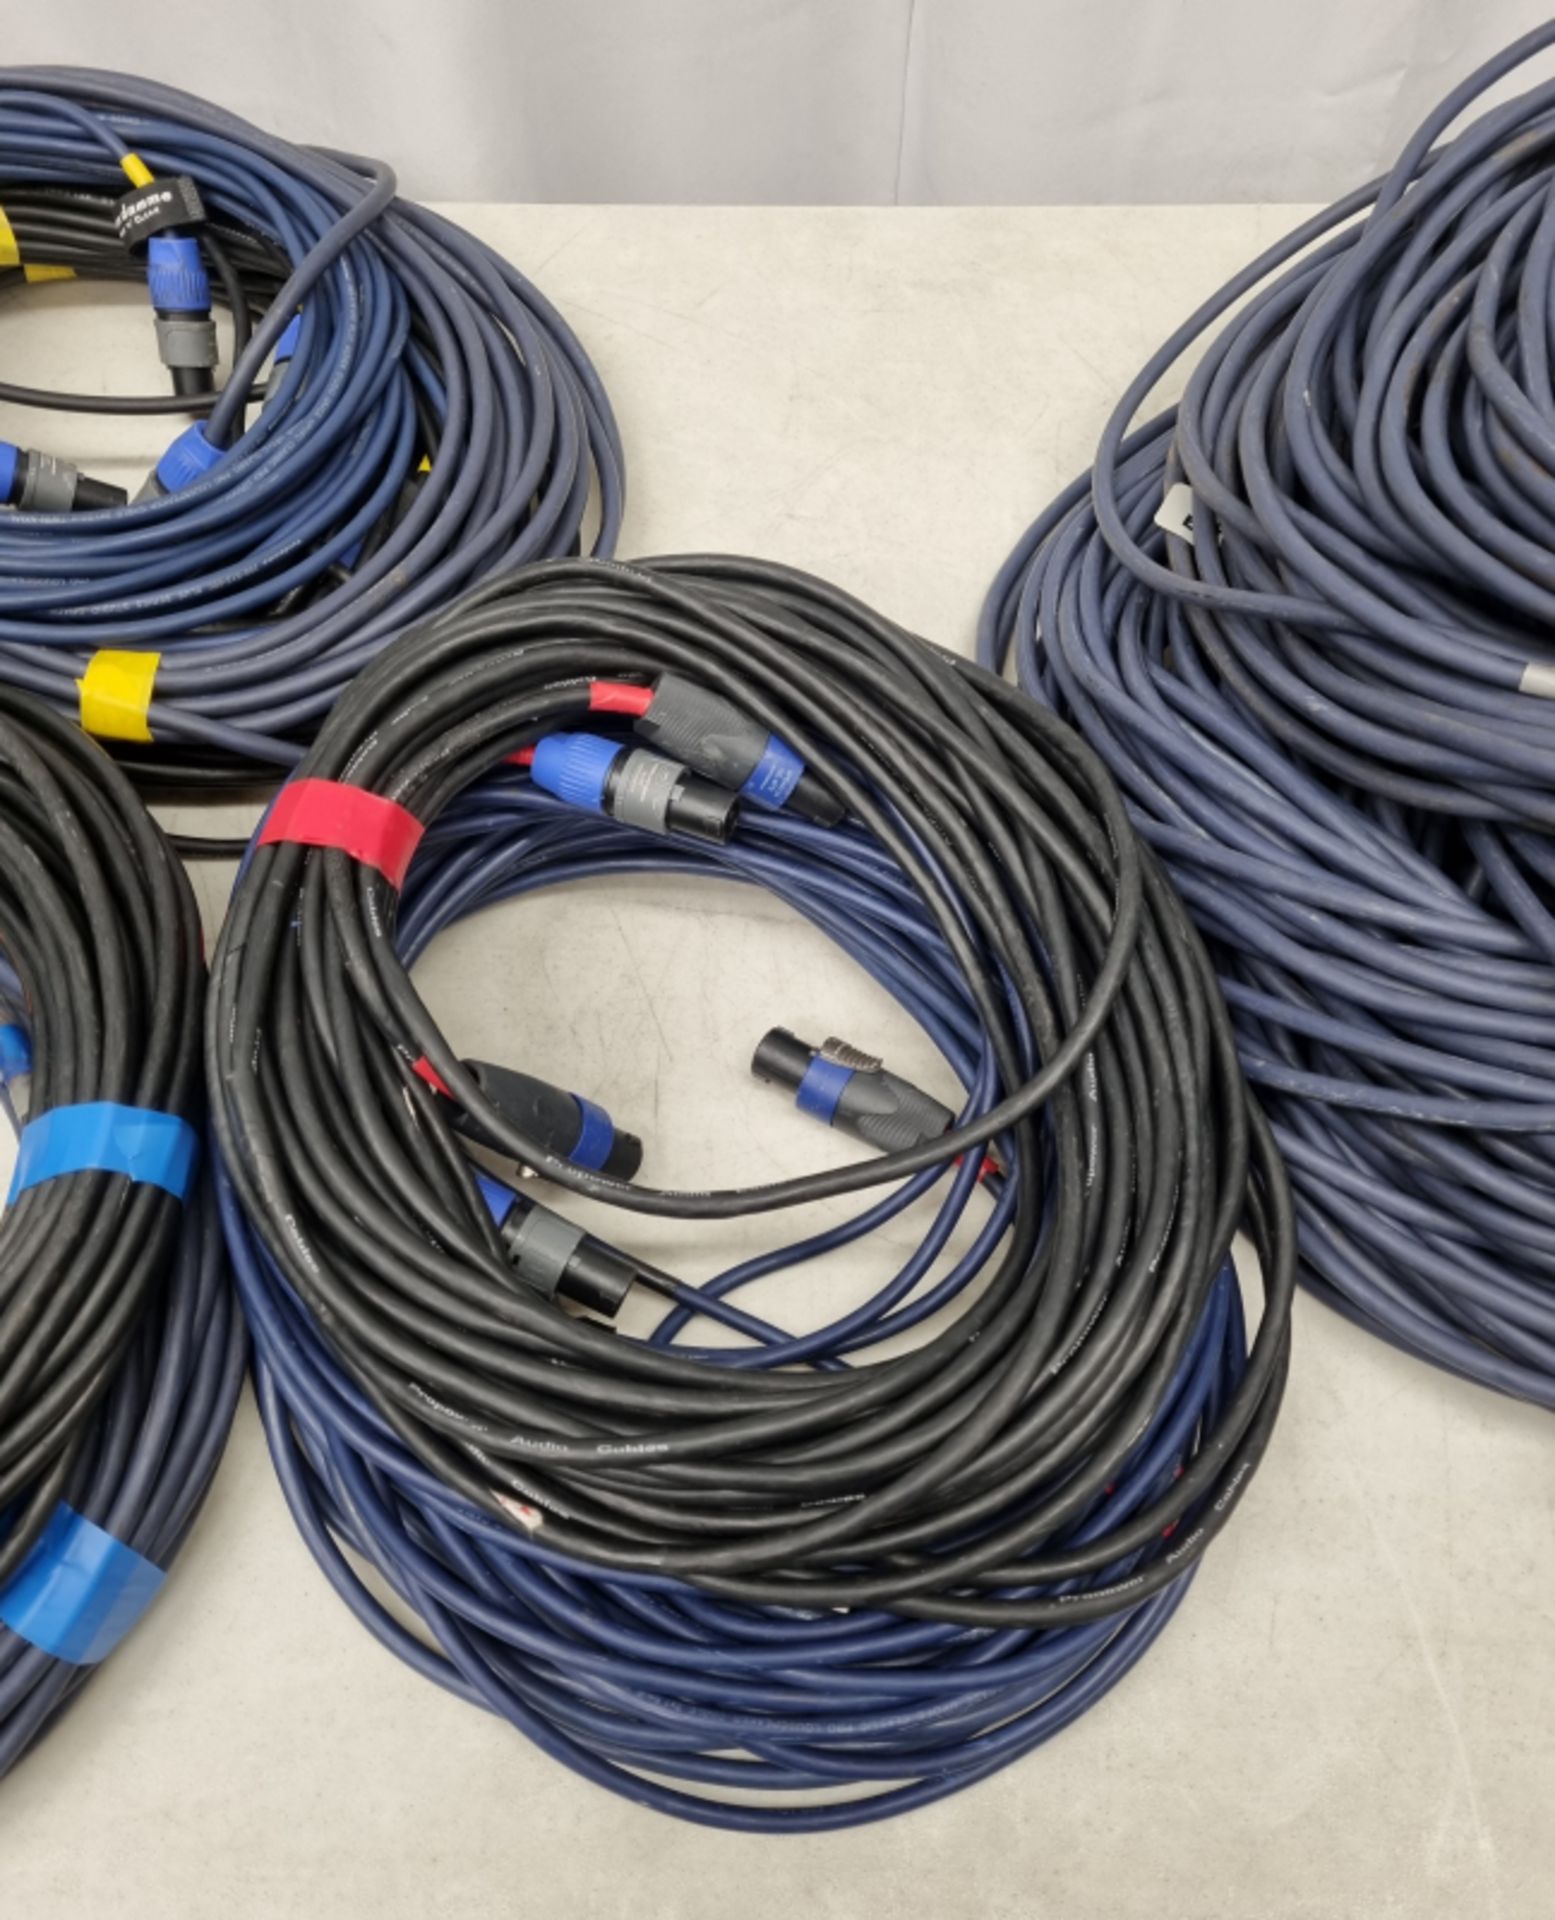 Speaker Cables - 12 X 20M / 14 X 10M / 2 X 30M - Image 4 of 8